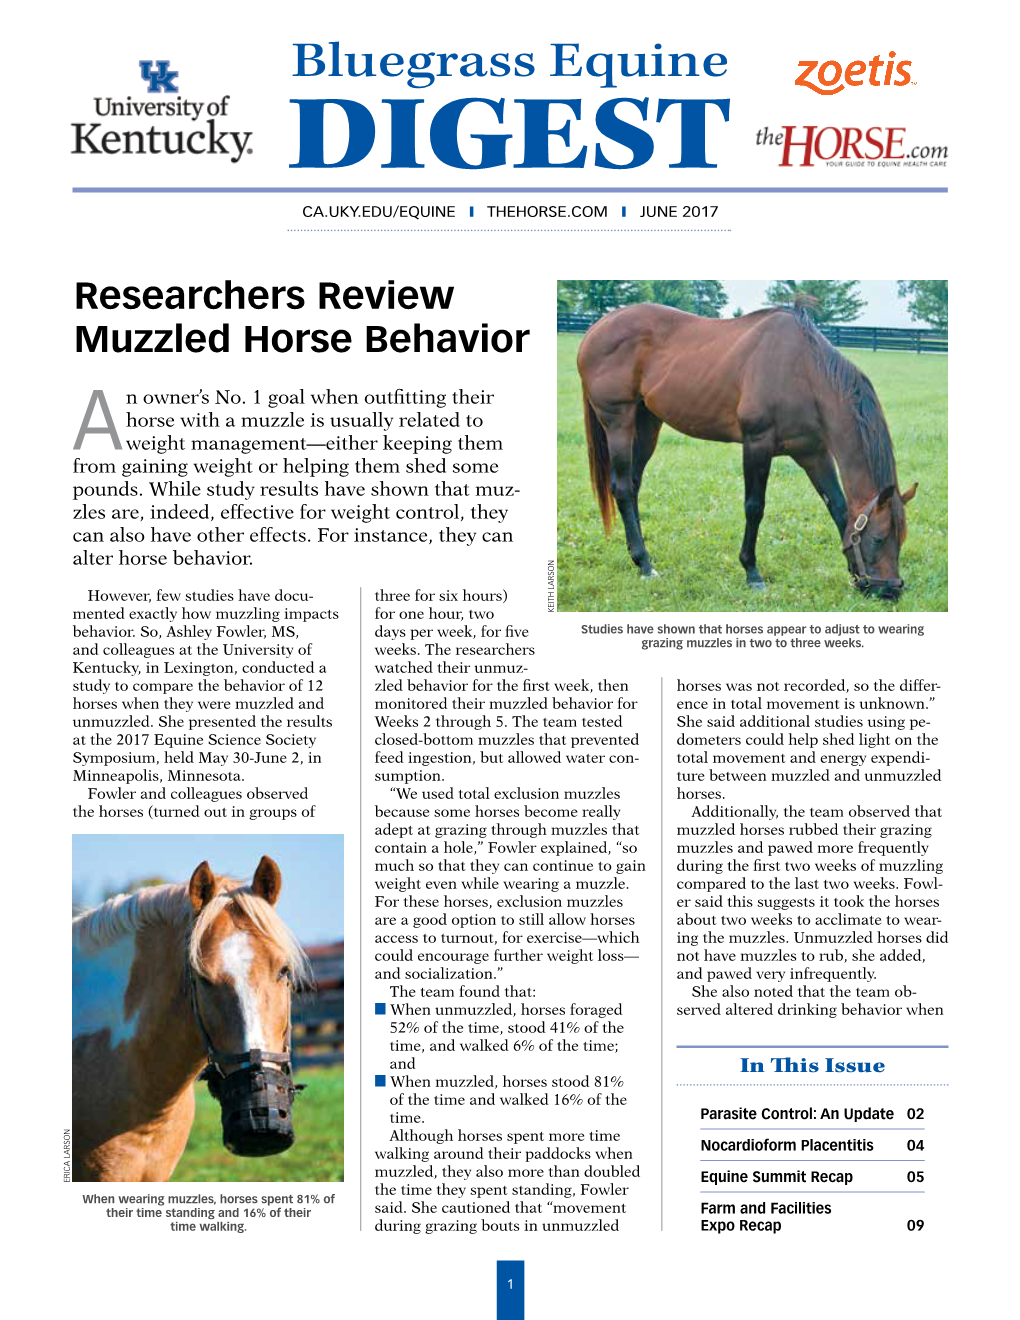 Researchers Review Muzzled Horse Behavior